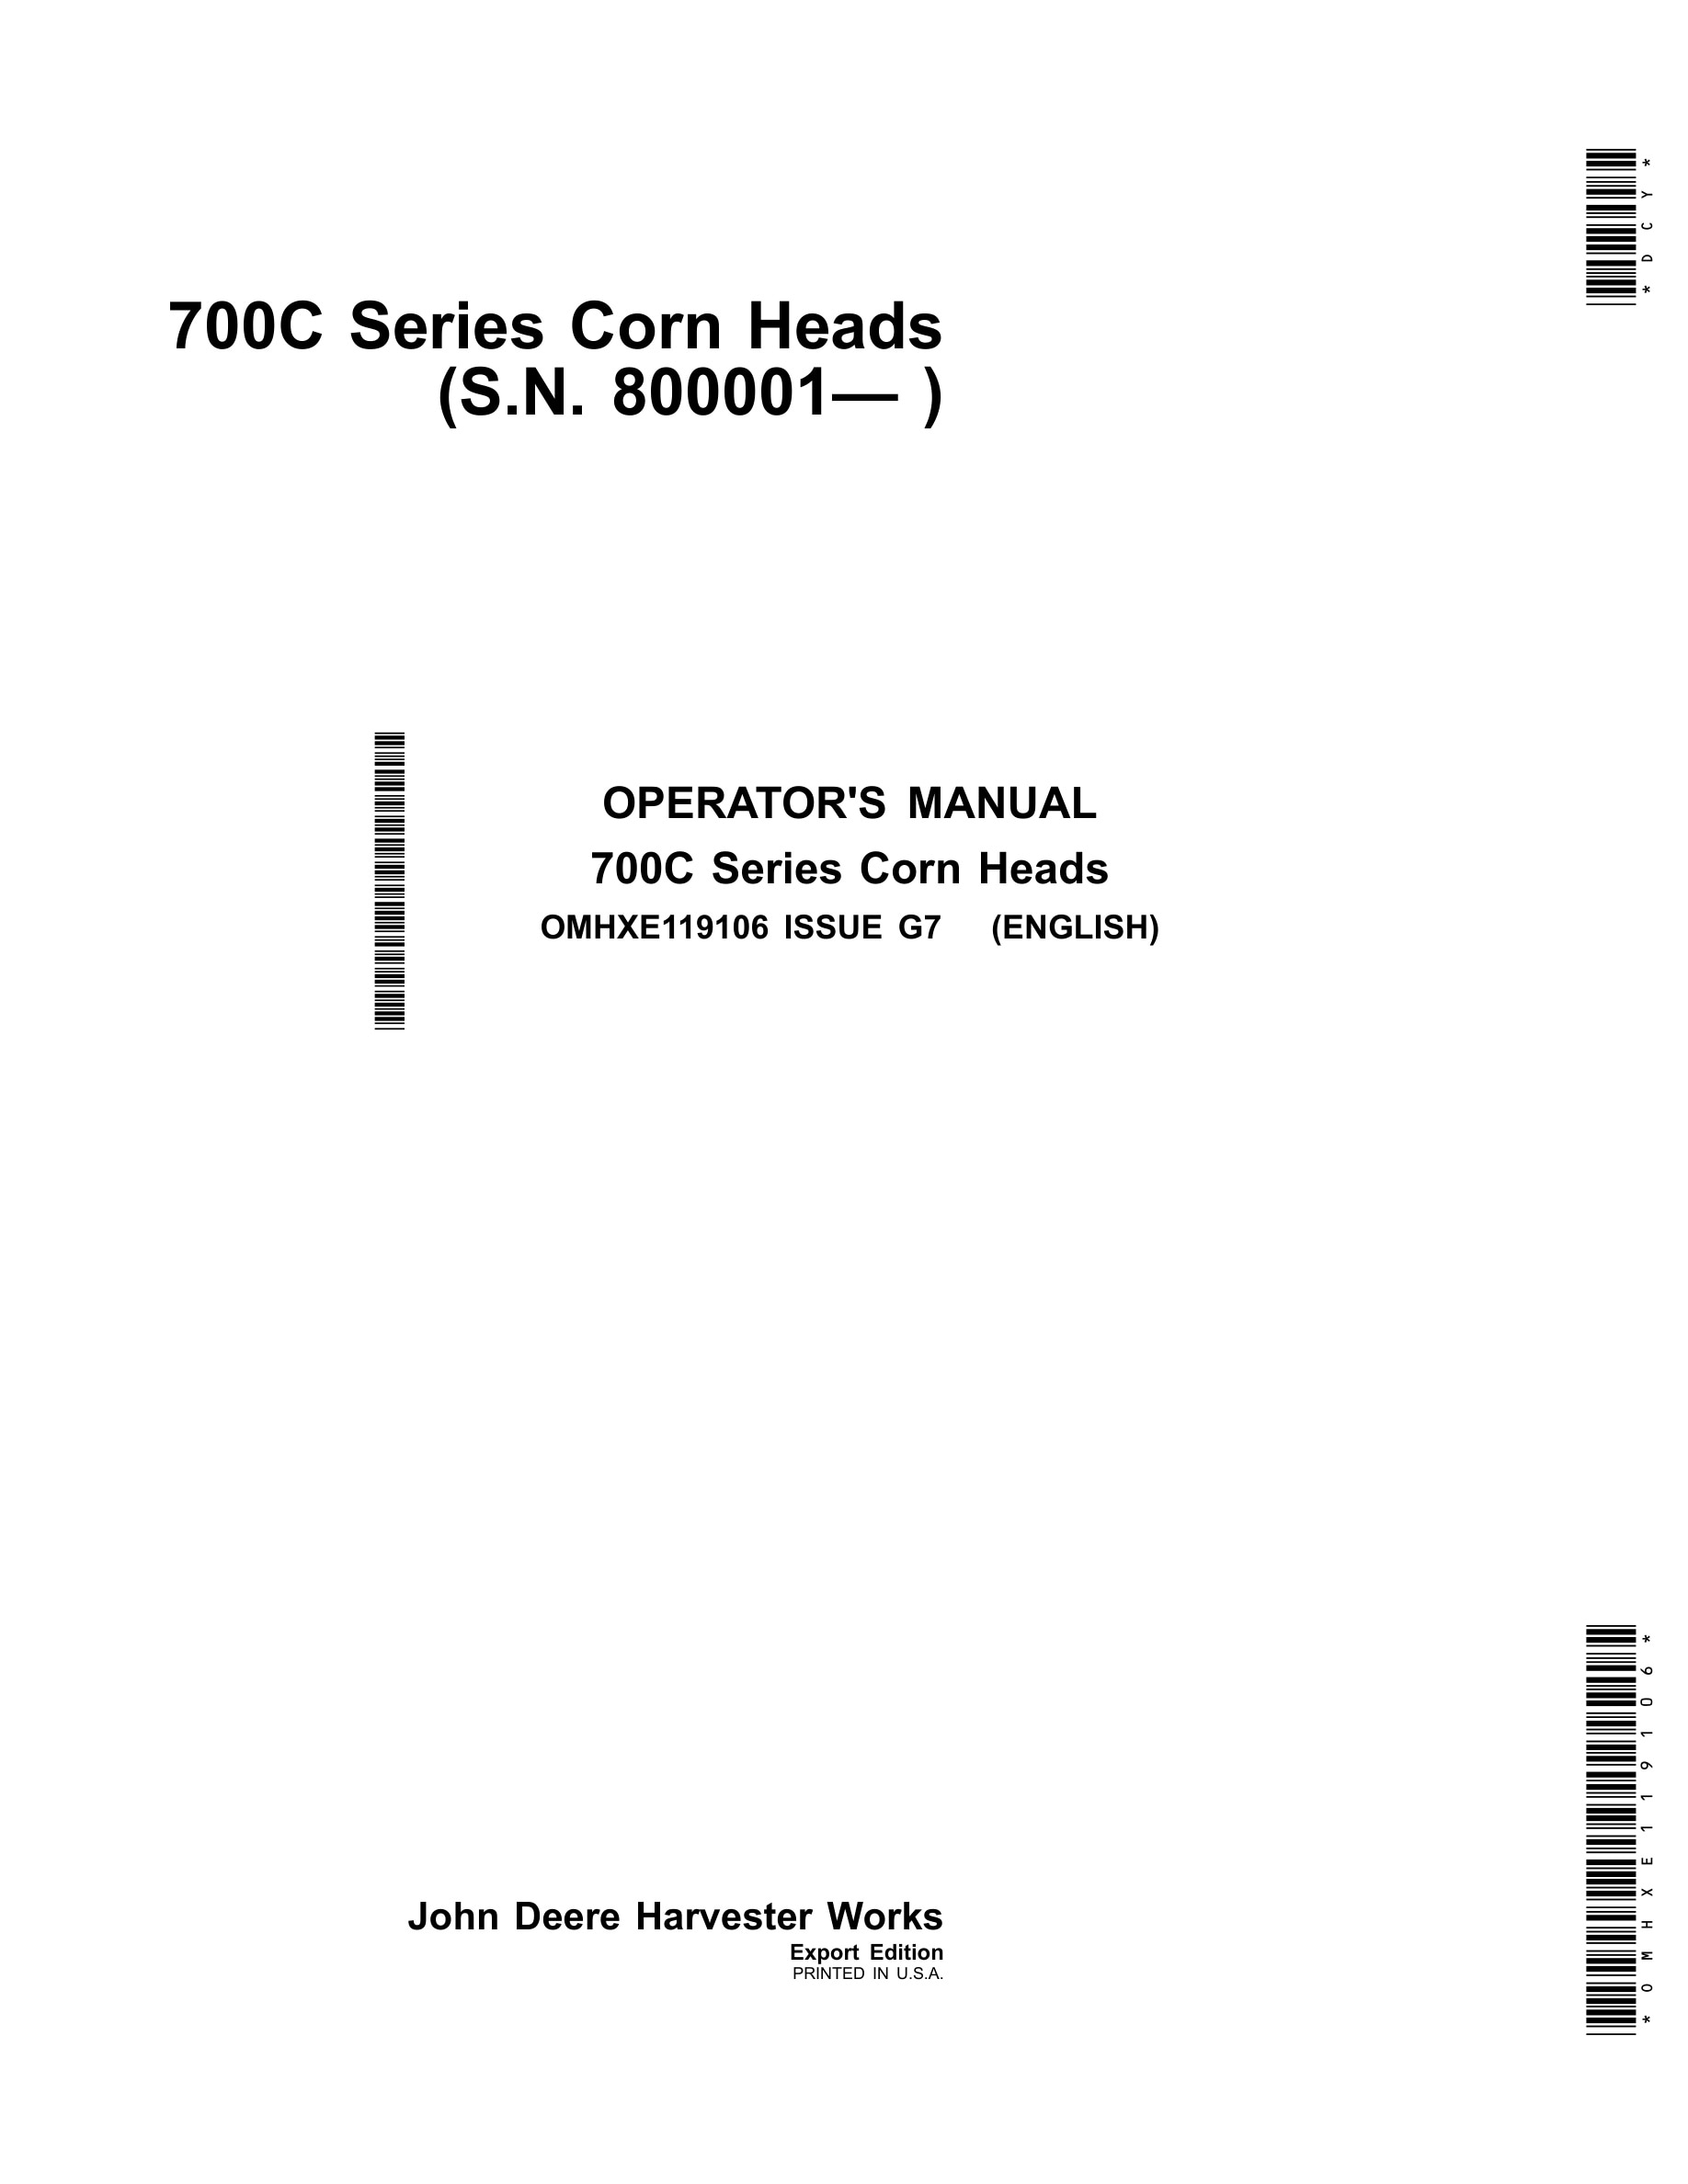 John Deere 700C Series Corn Heads Operator Manual OMHXE119106-1